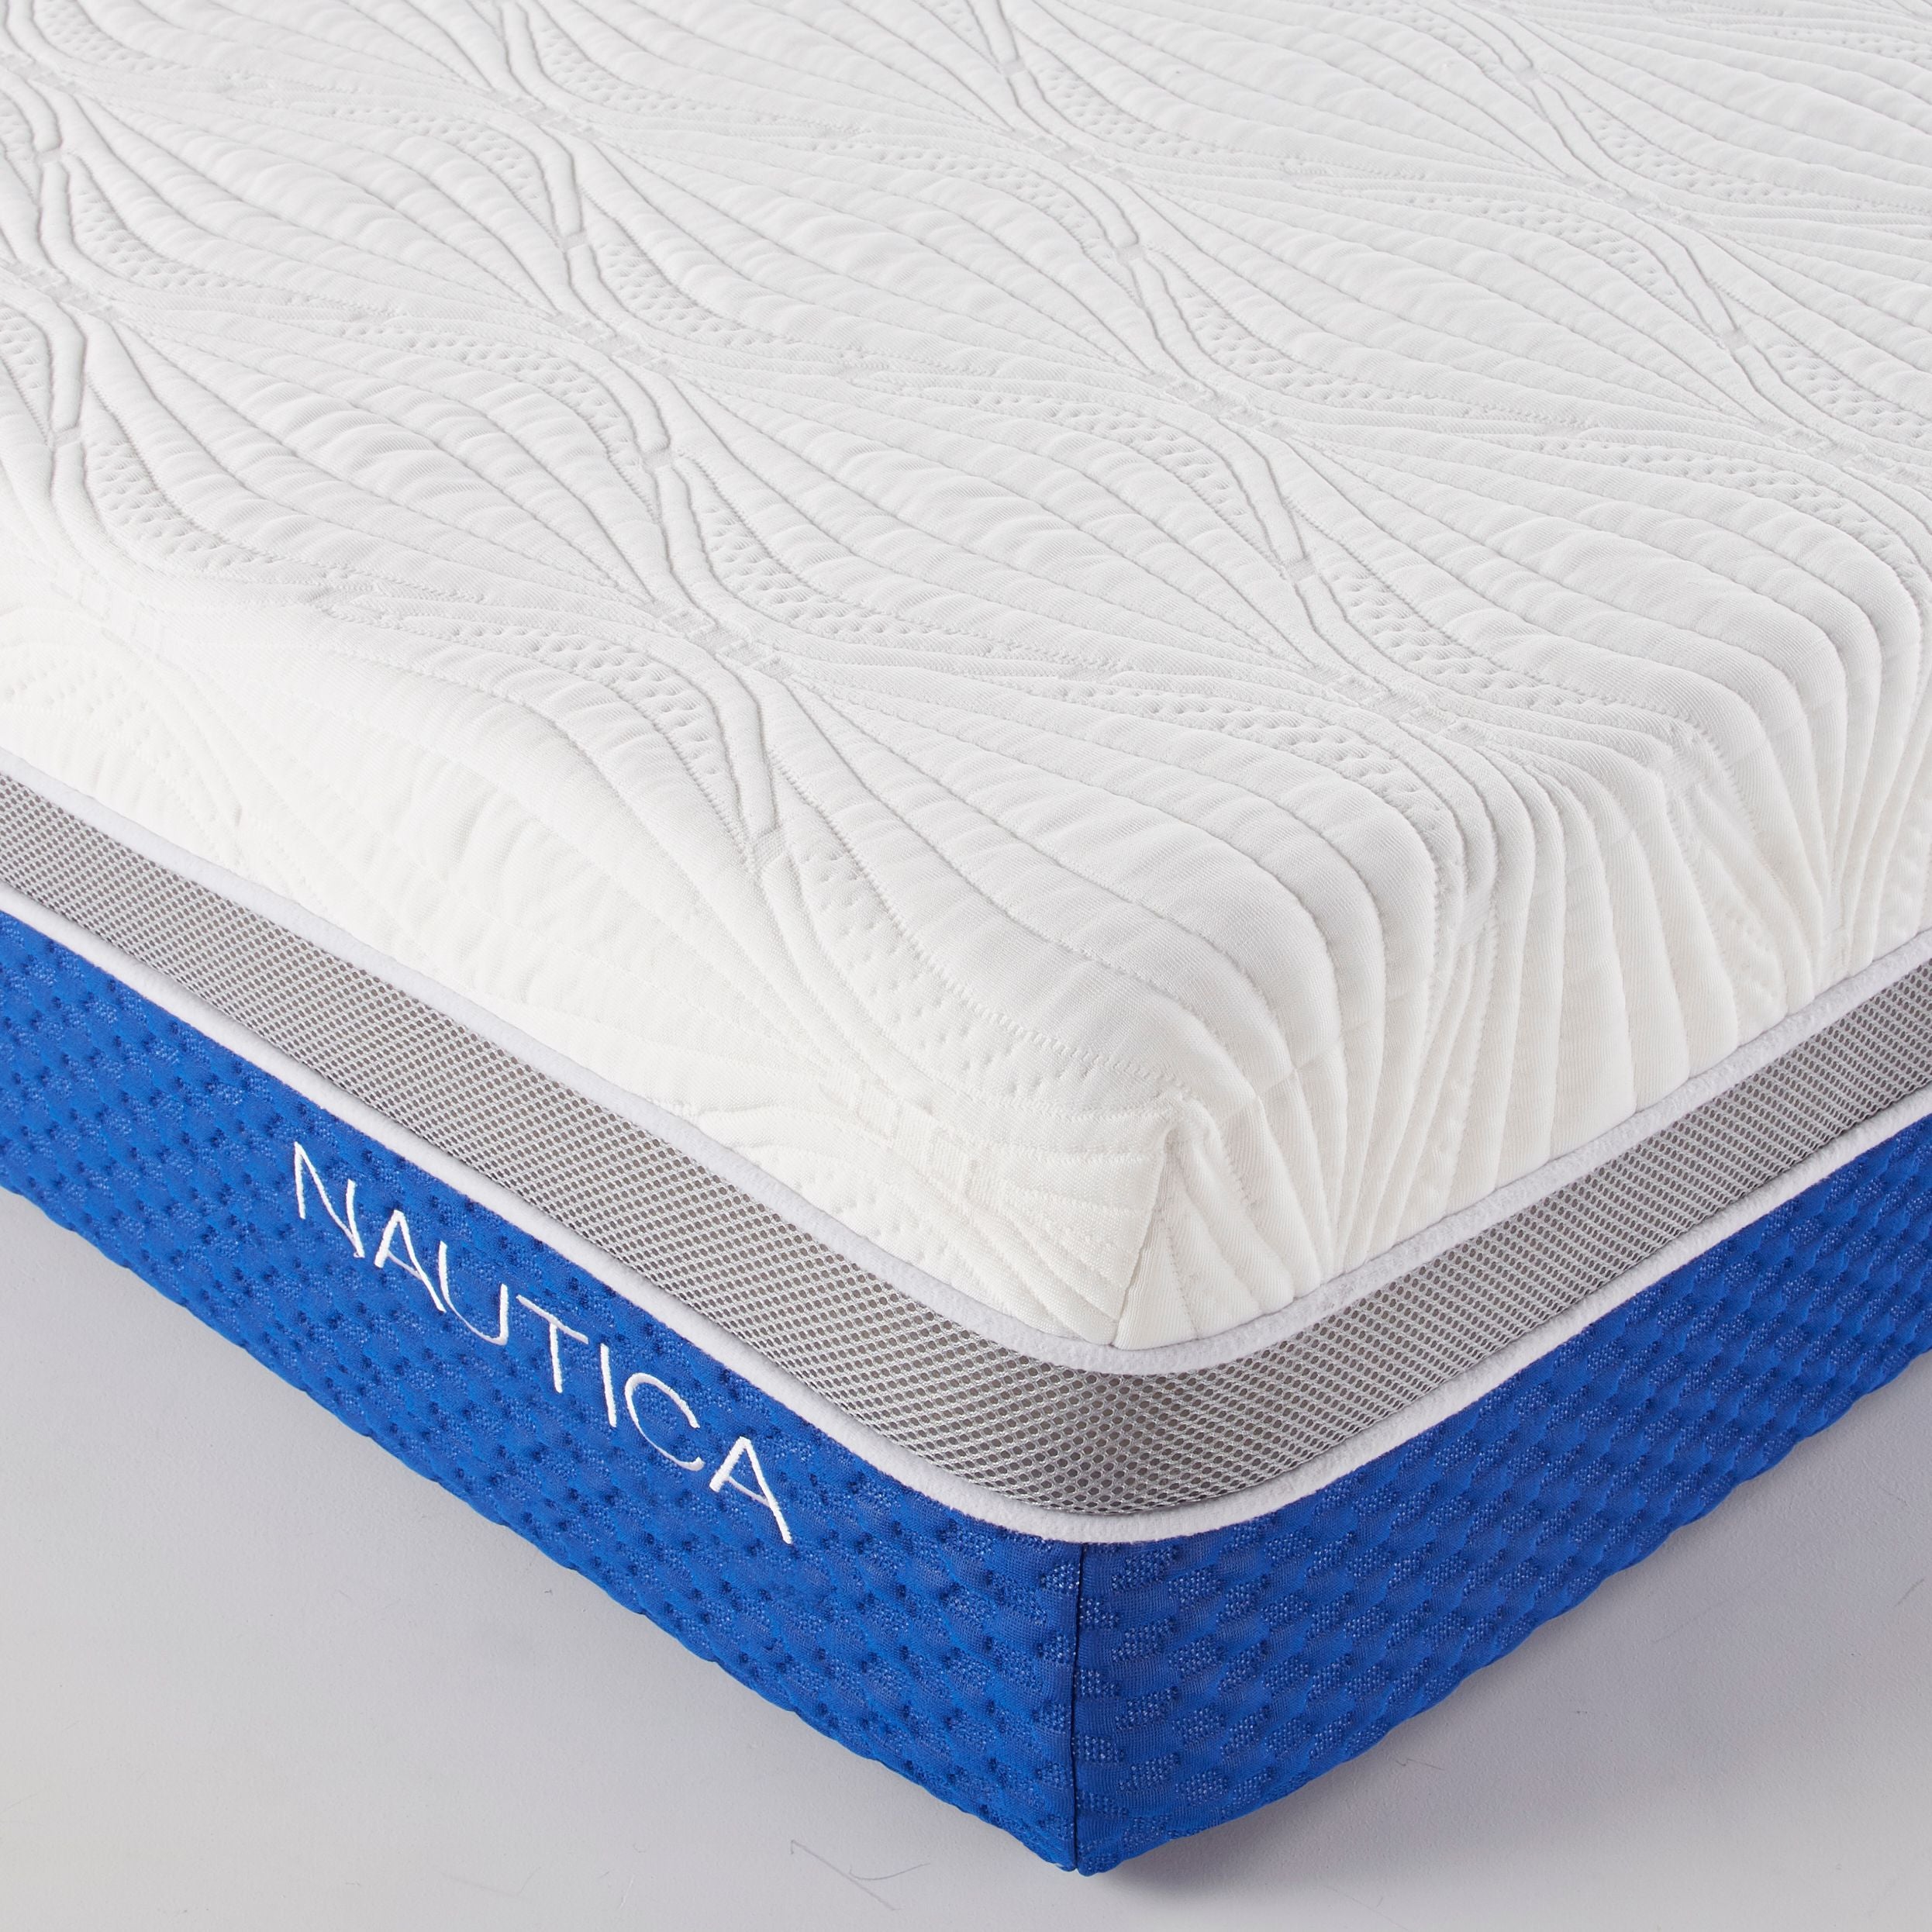 Nautica Home 10" Calm Cushion Firm Gel Memory Foam Mattress - Twin XL